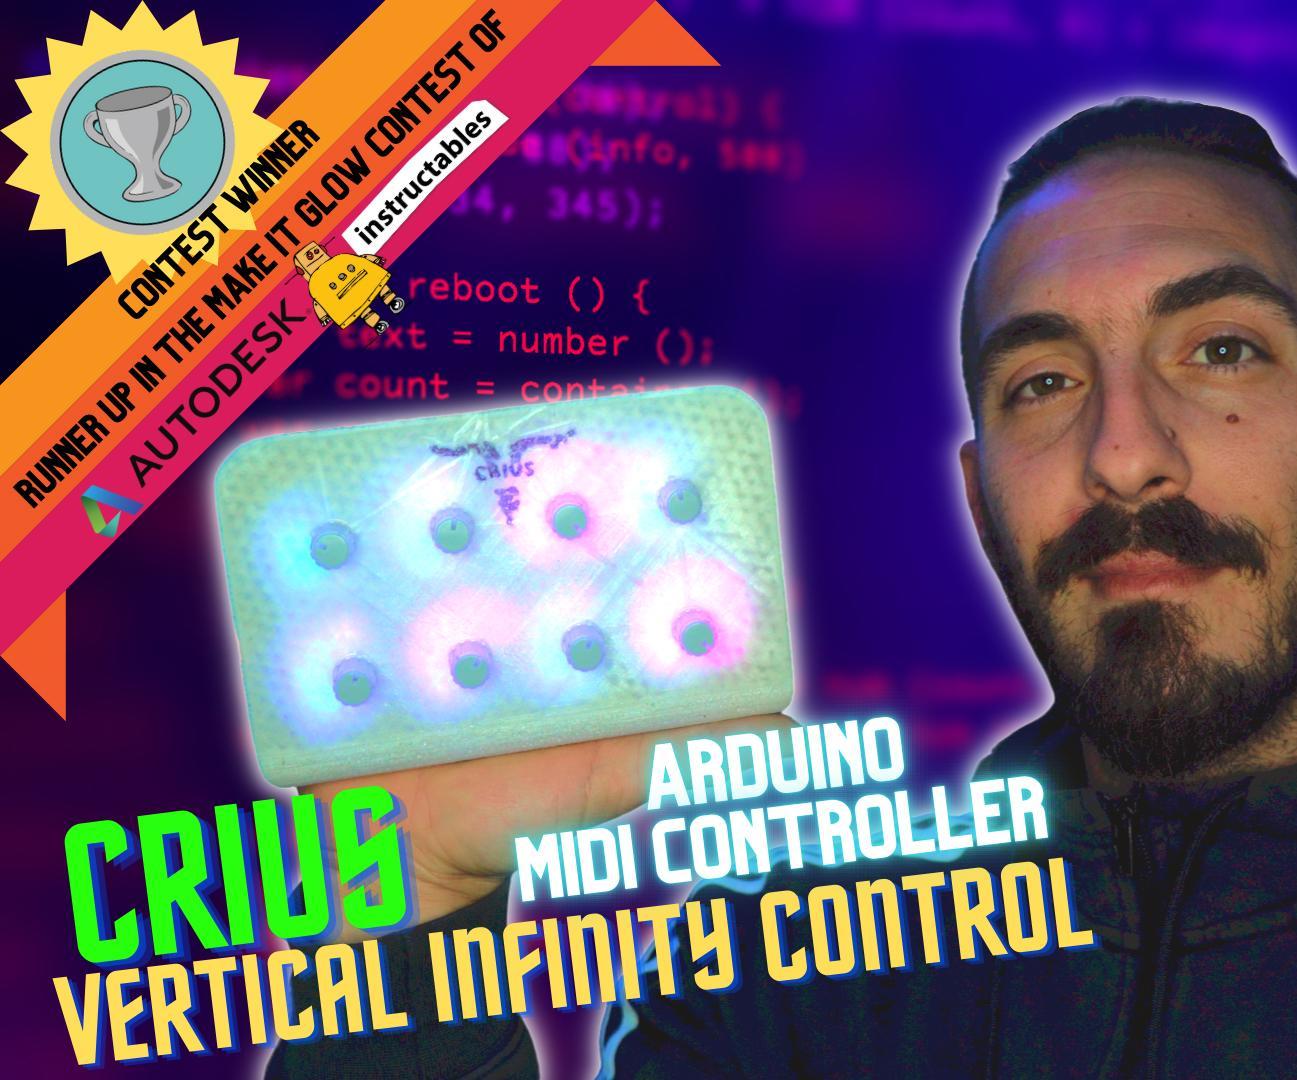 Crius “Vertical Infinity Control V1.0” USB MIDI Controller